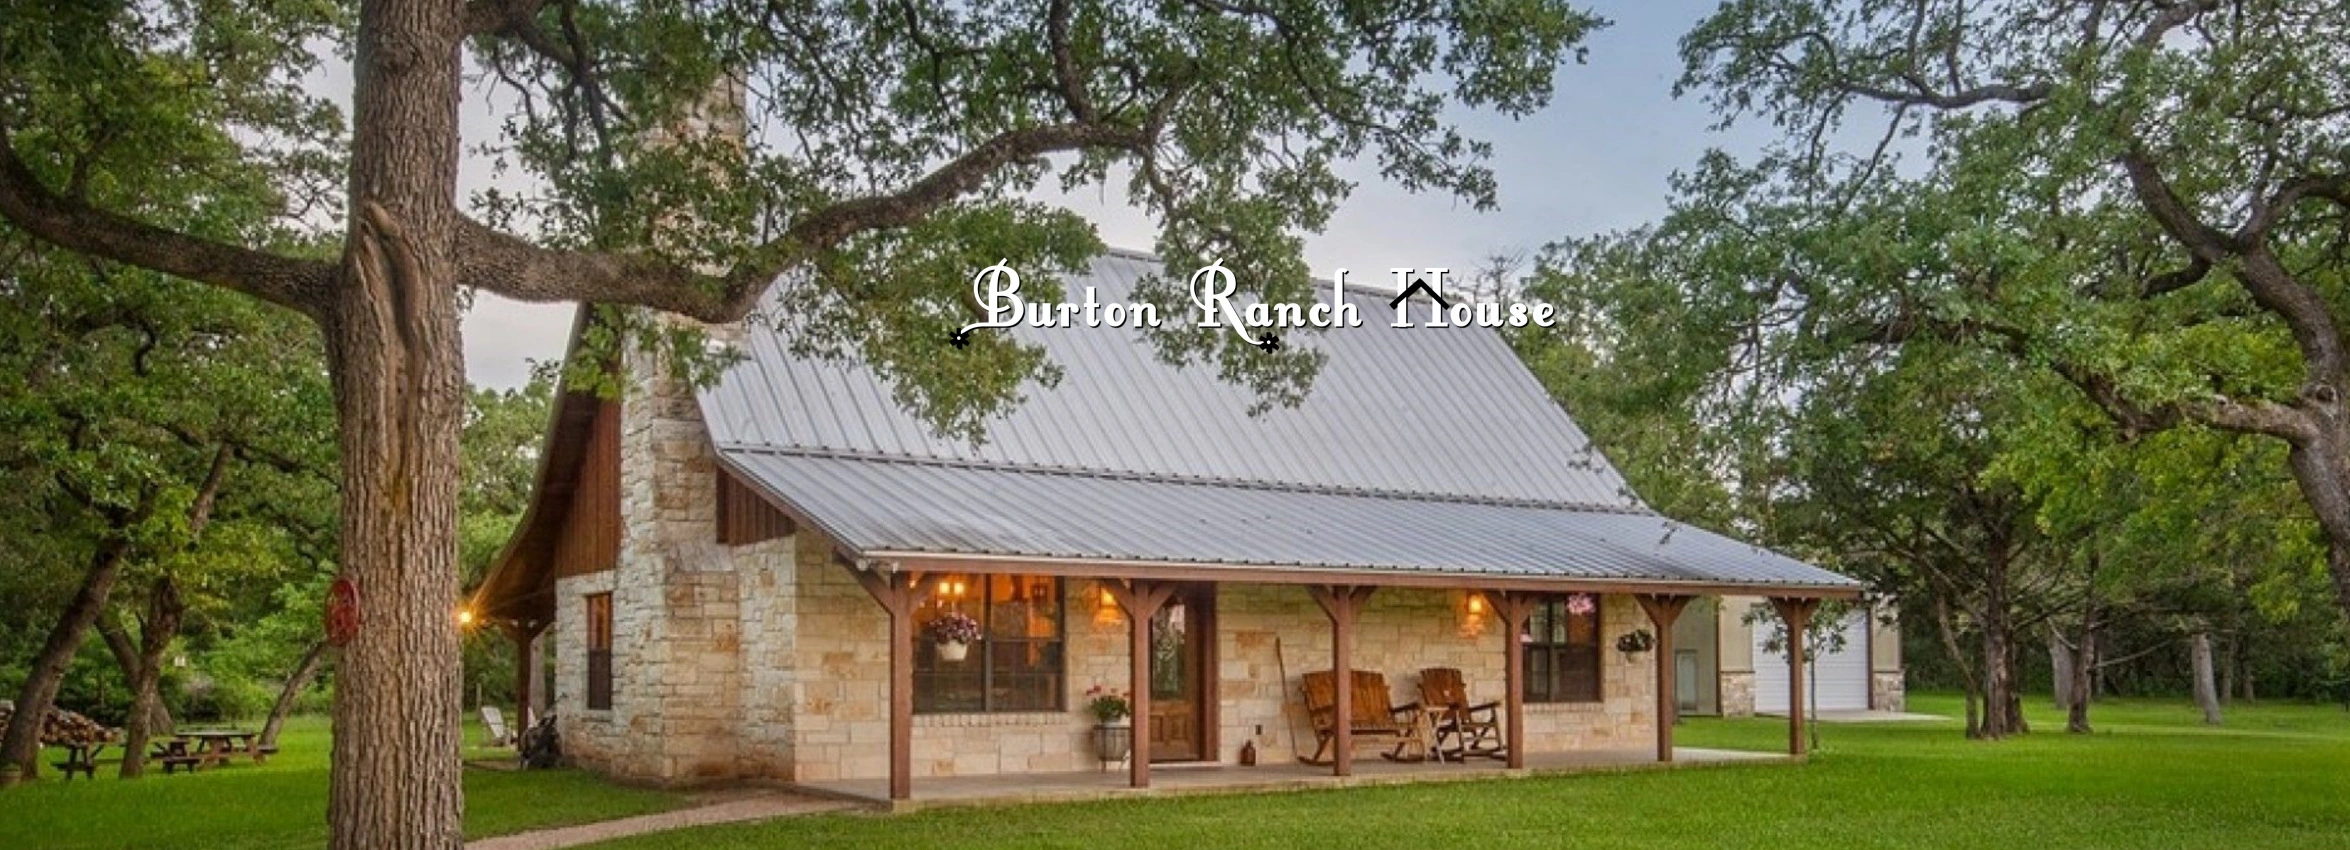 Burton-Ranch-House_Desktop_ET